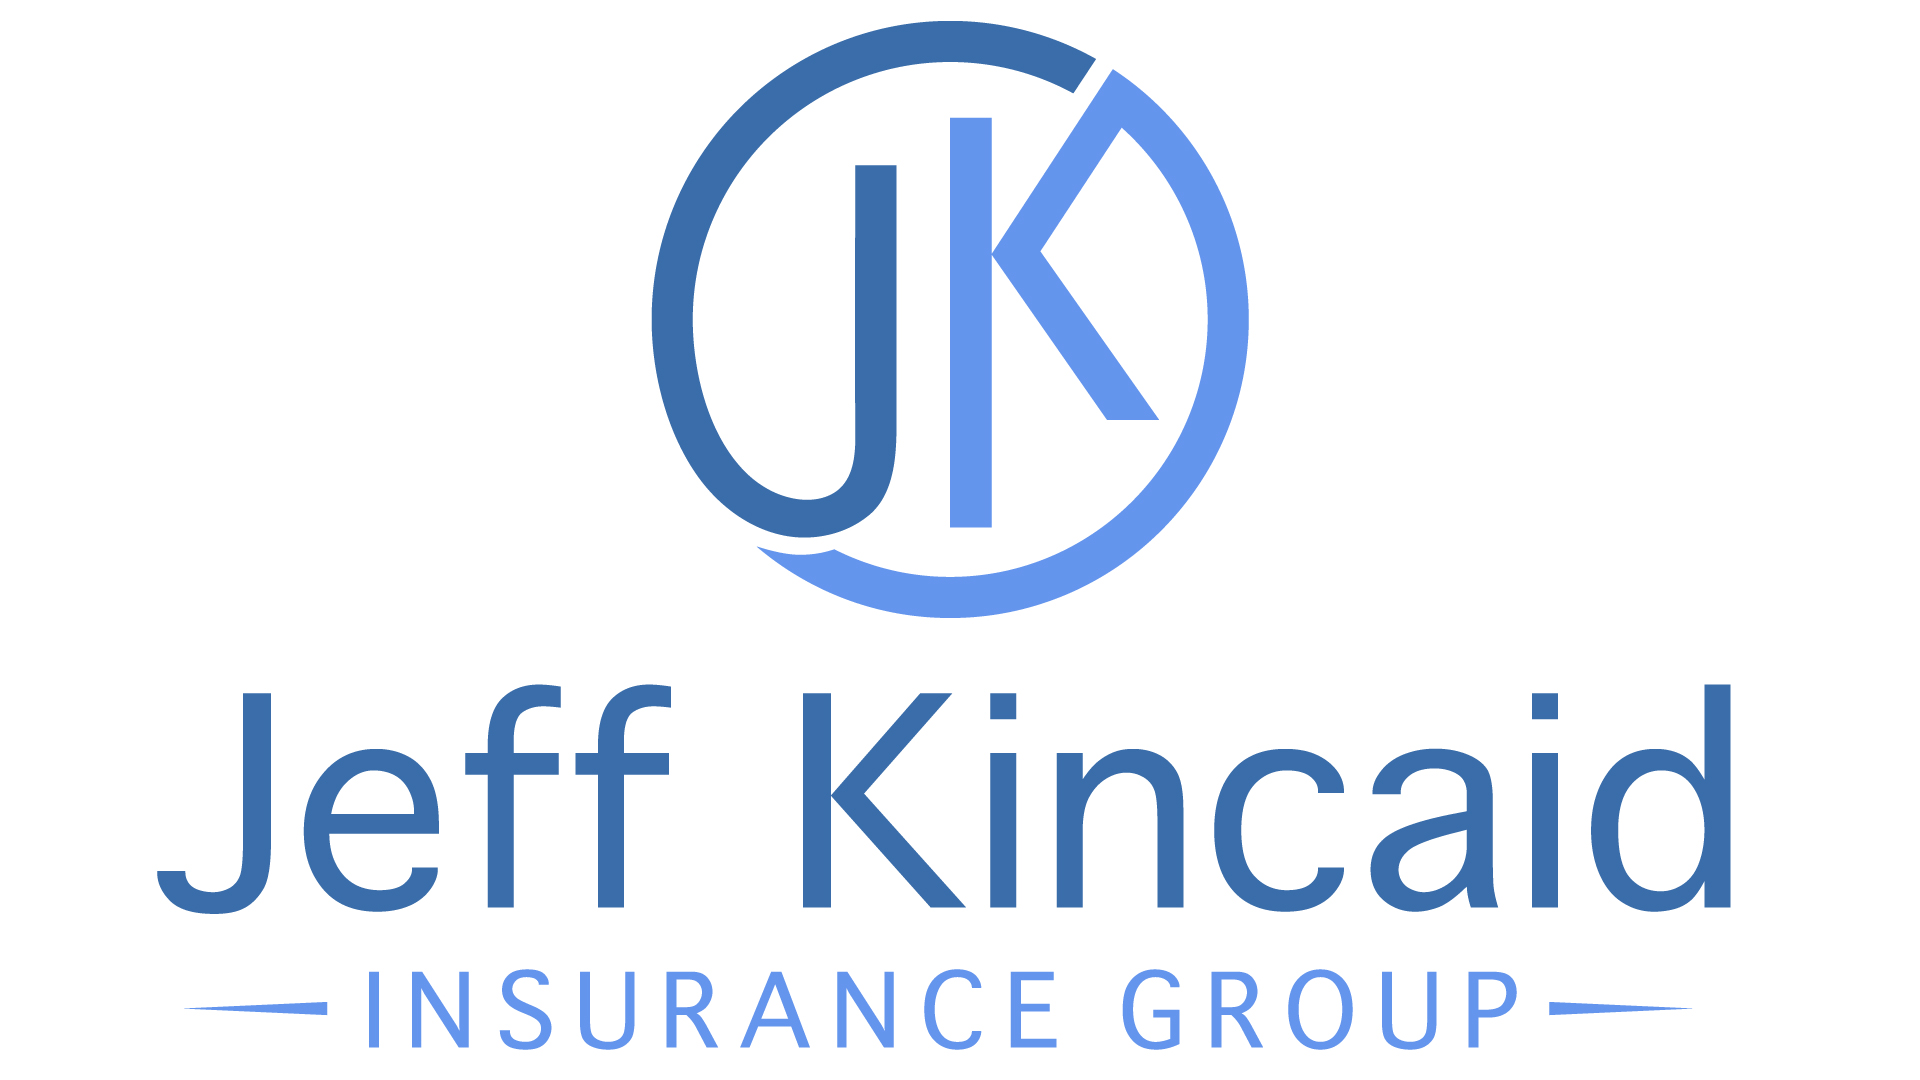 jeff kincaid insurance logo morganton Hickory